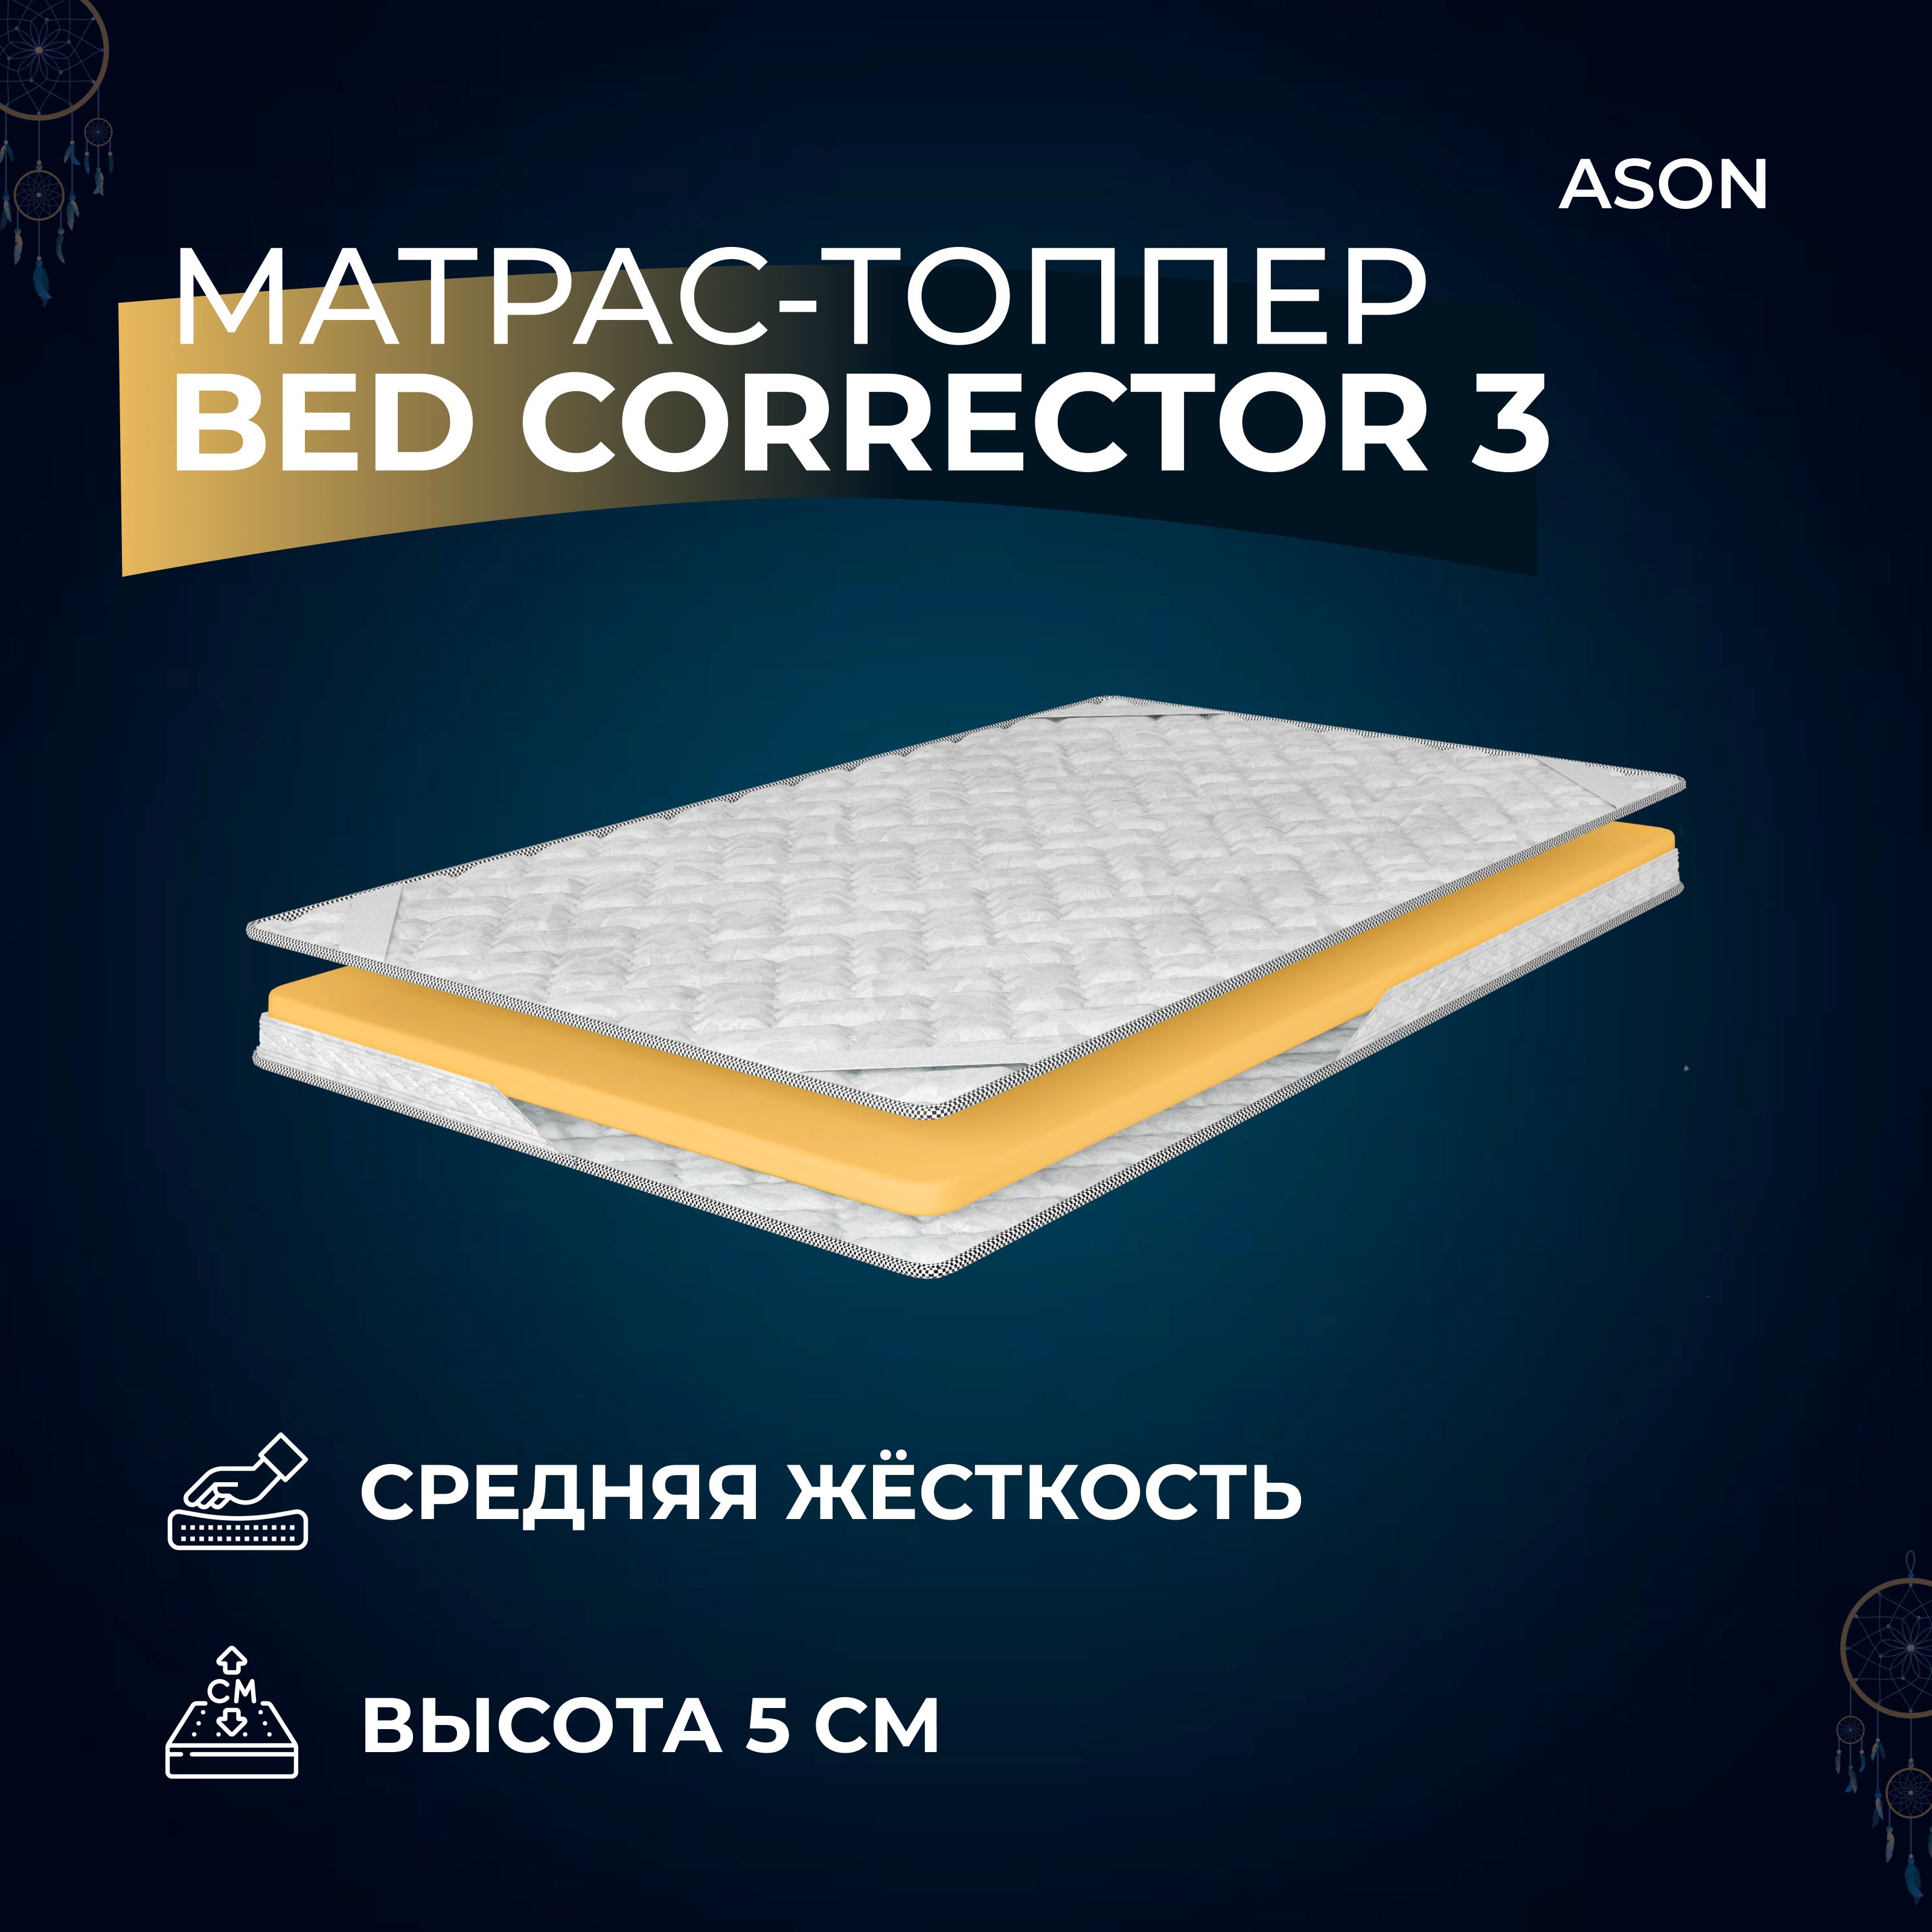 Матрас-топпер 175х200 Ason, Bed corrector 3